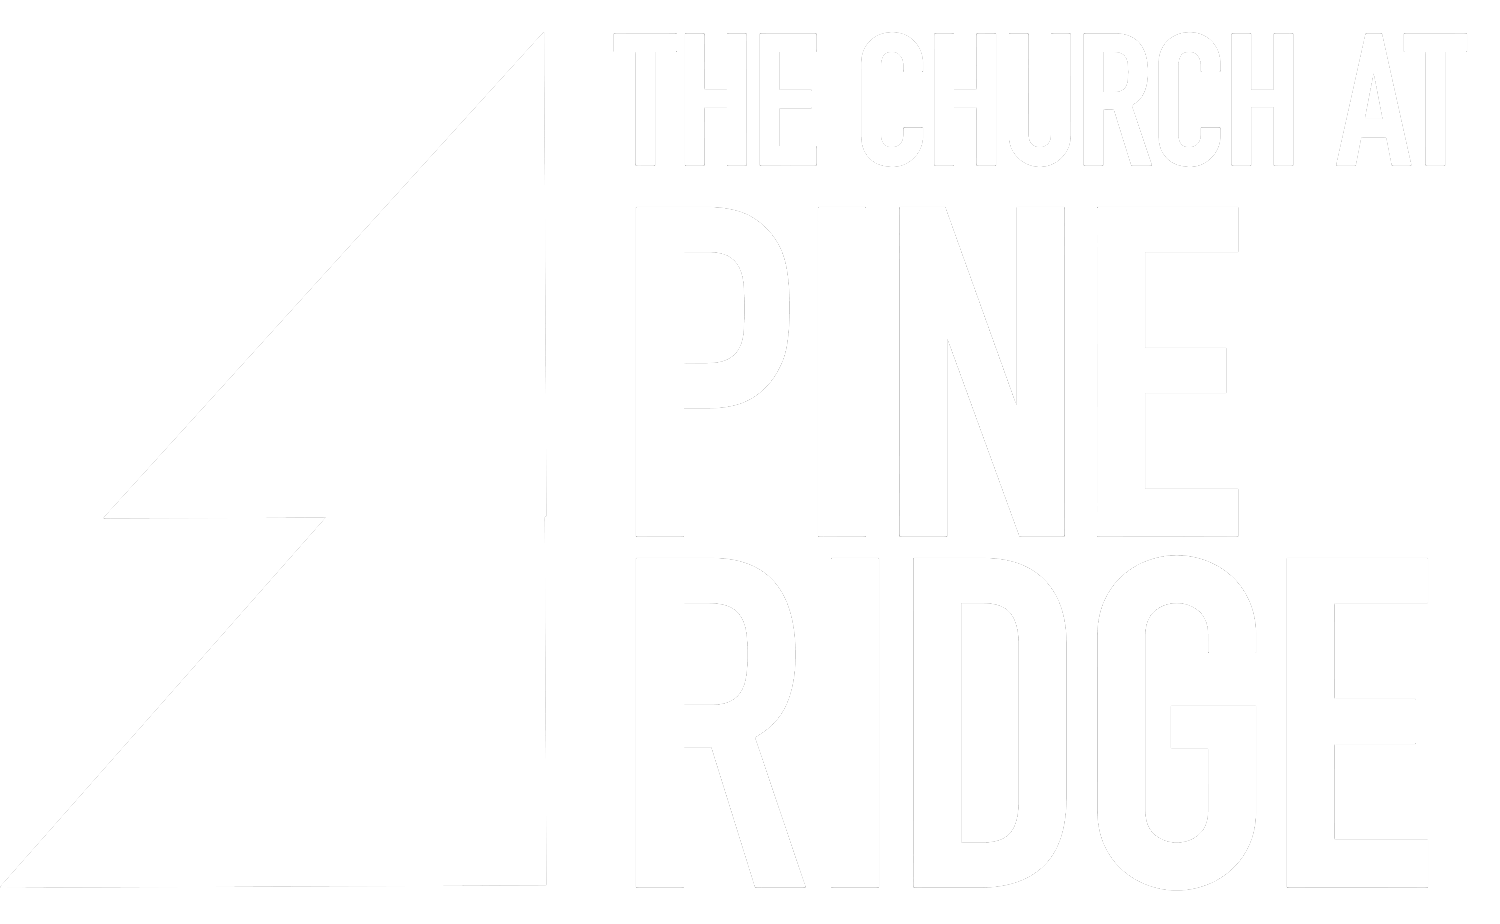 The Church at Pine Ridge